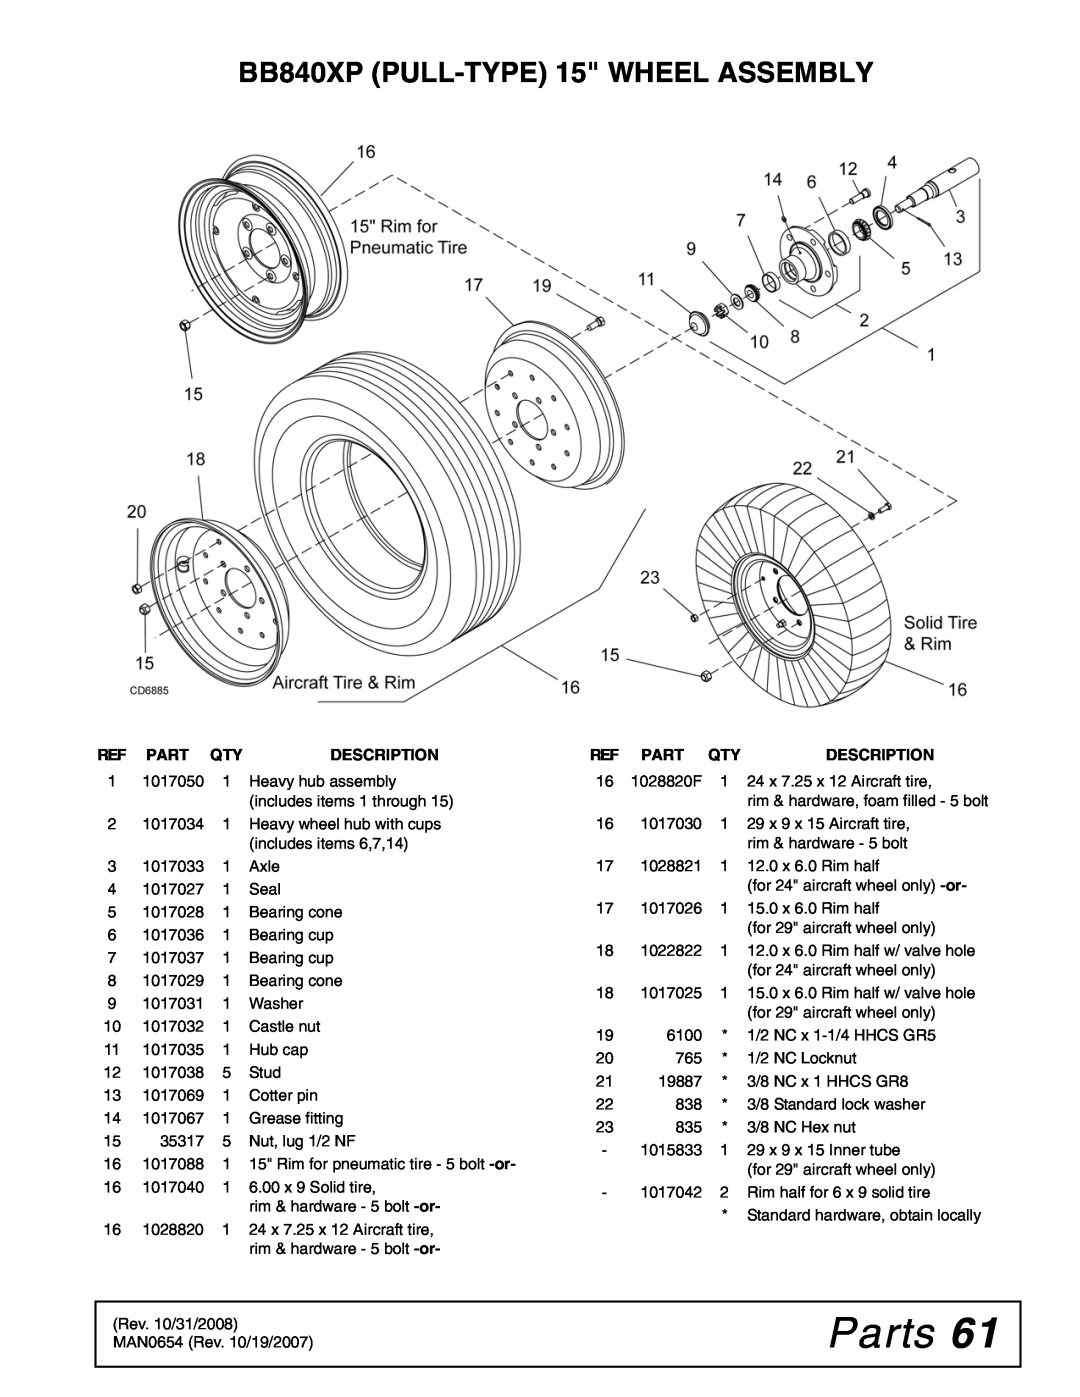 Woods Equipment BB600X, BB720X manual BB840XP PULL-TYPE 15 WHEEL ASSEMBLY, Parts, Ref Part Qty, Description 